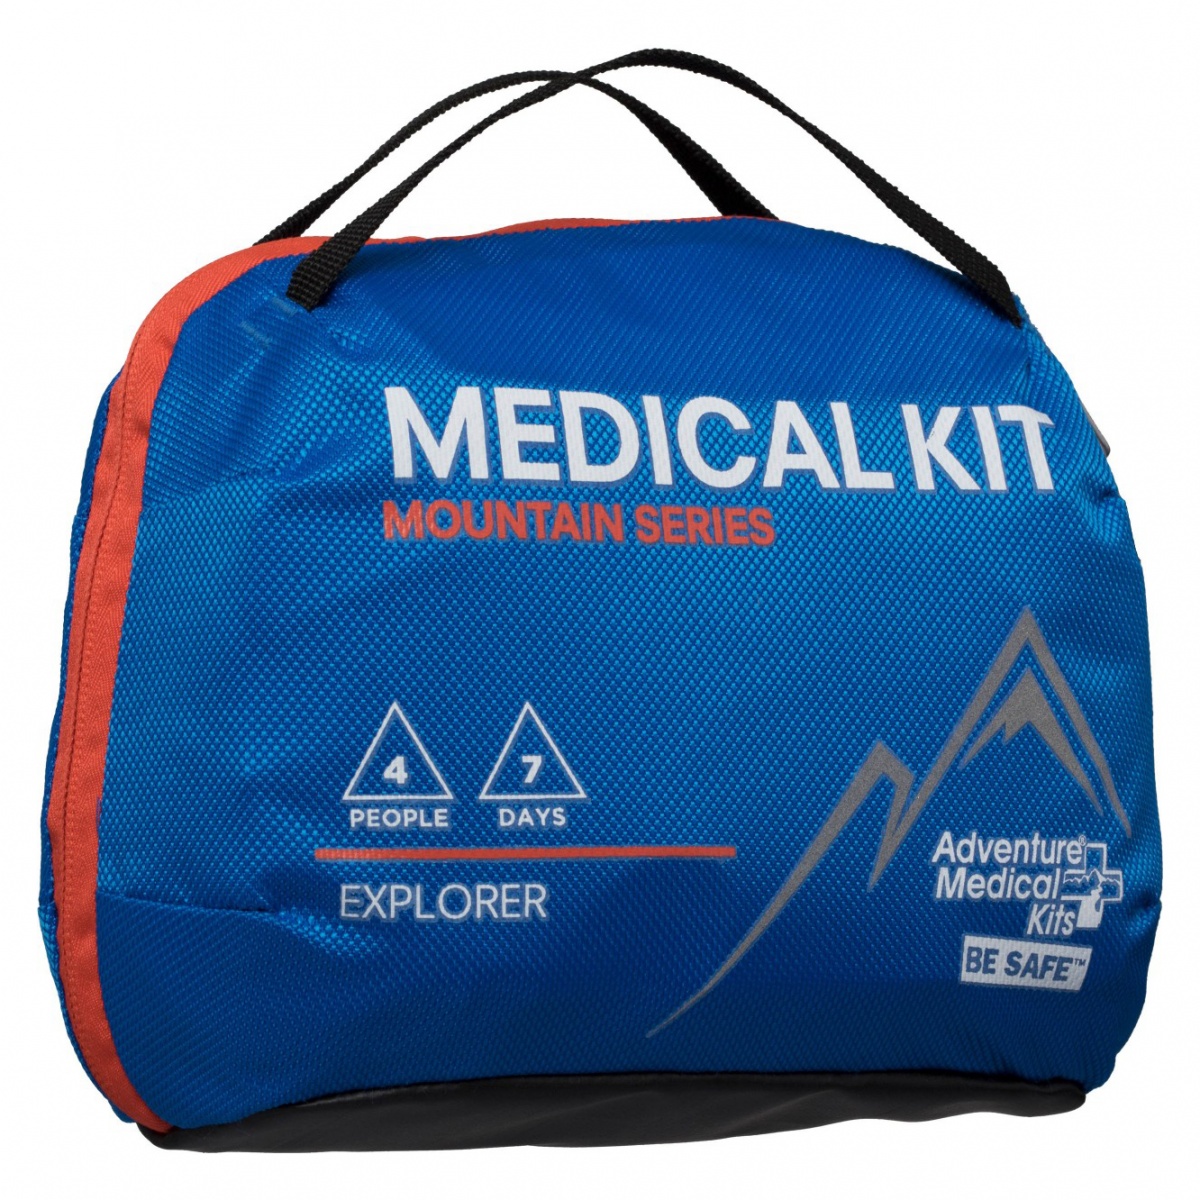 Adventure Medical Kits Mountain Series Explorer Review